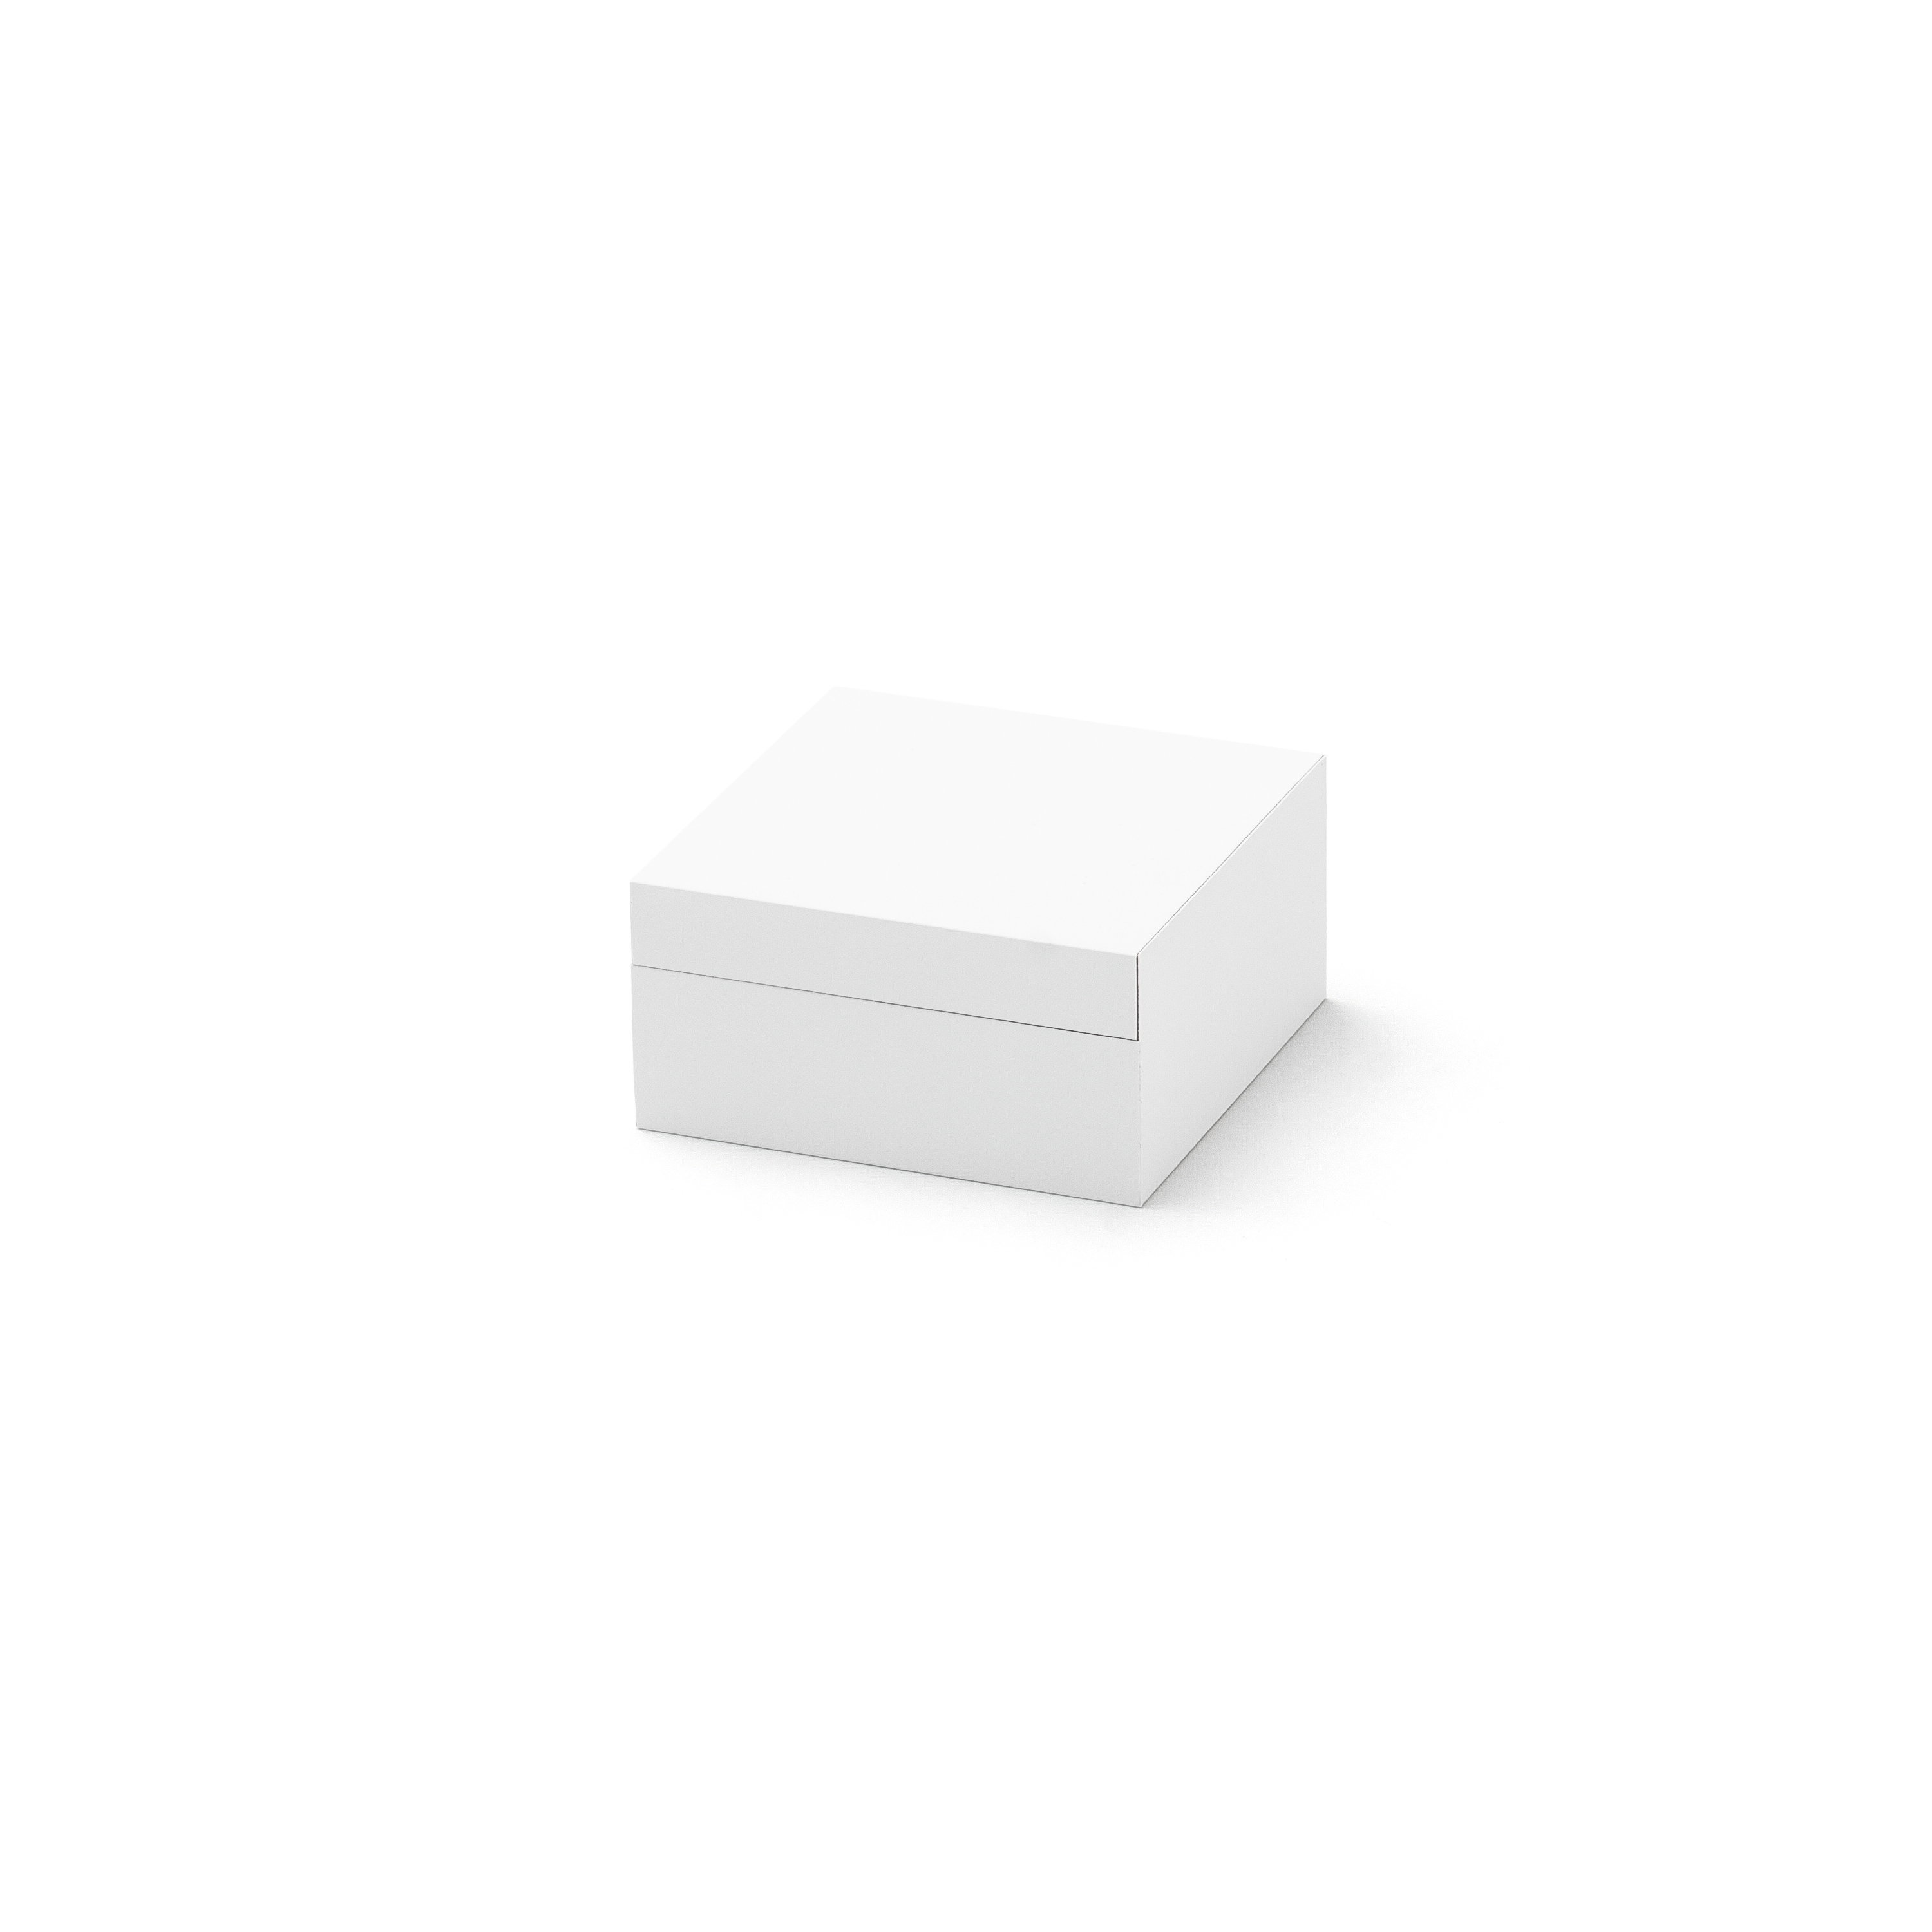 Whitebox Universal, small 60 x 60 x 30 mm